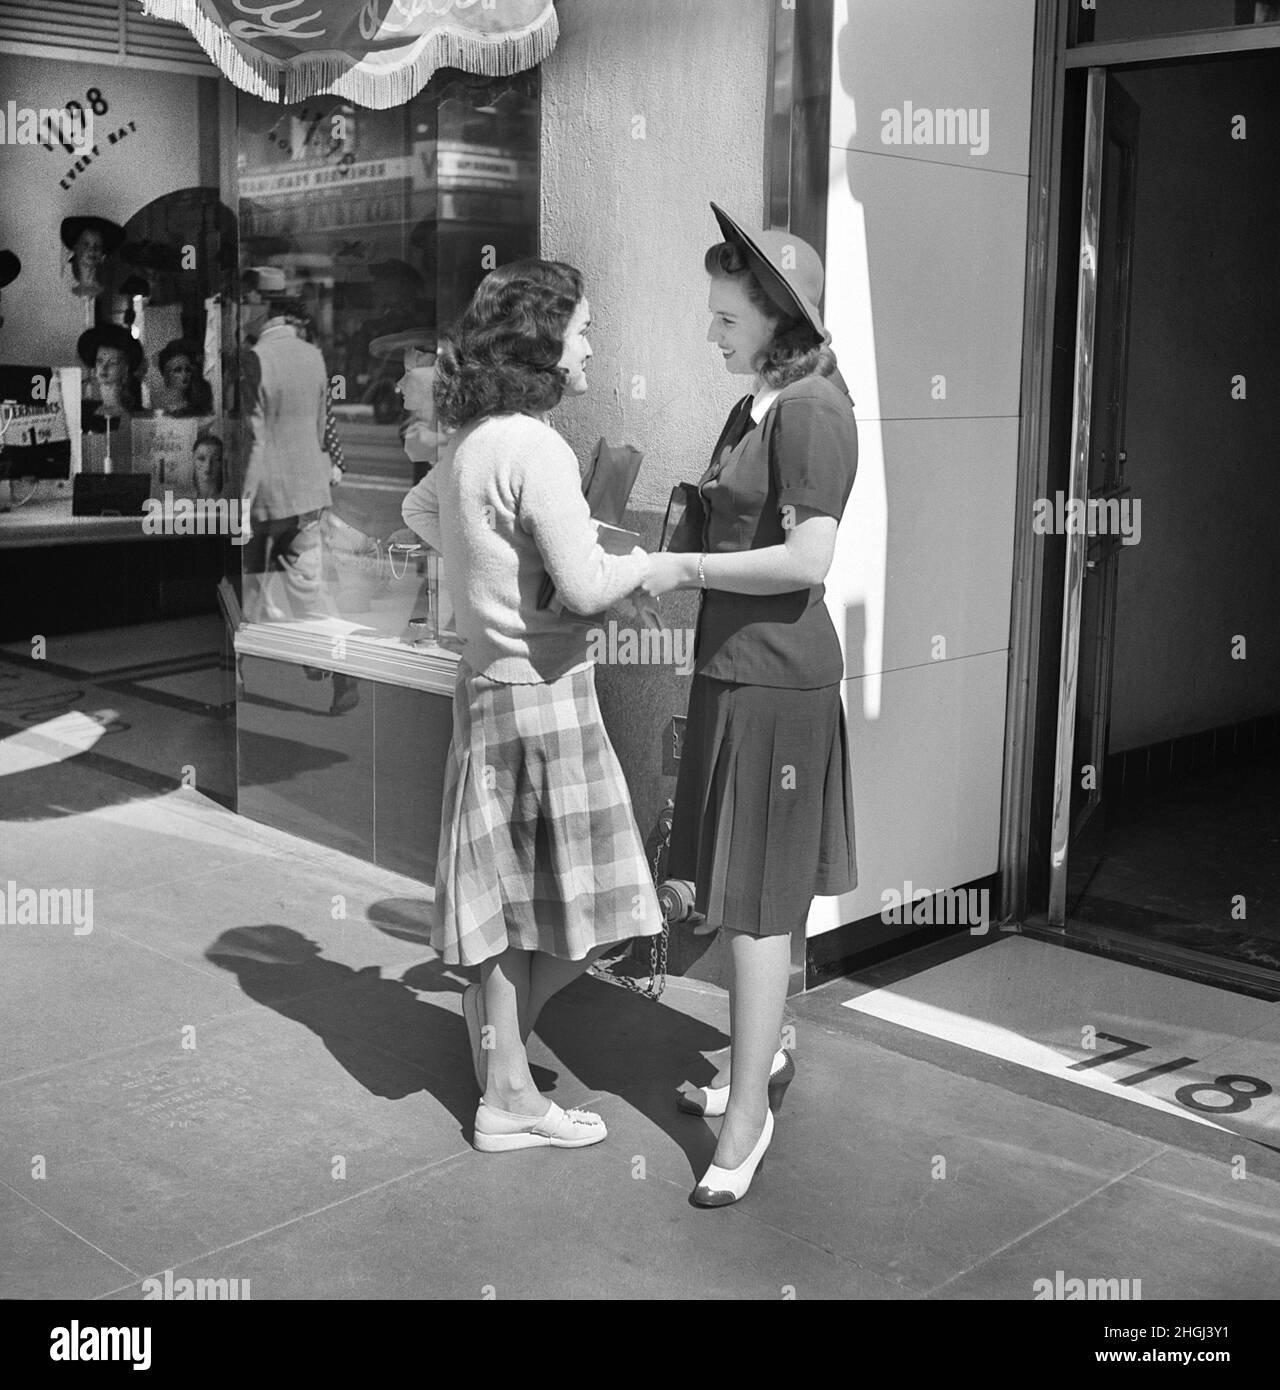 Zwei junge Erwachsene Frauen im Gespräch in Downtown Street, Los Angeles, Kalifornien, USA, Russell Lee, US Office of war Information/USA Farm Security Administration, April 1942 Stockfoto